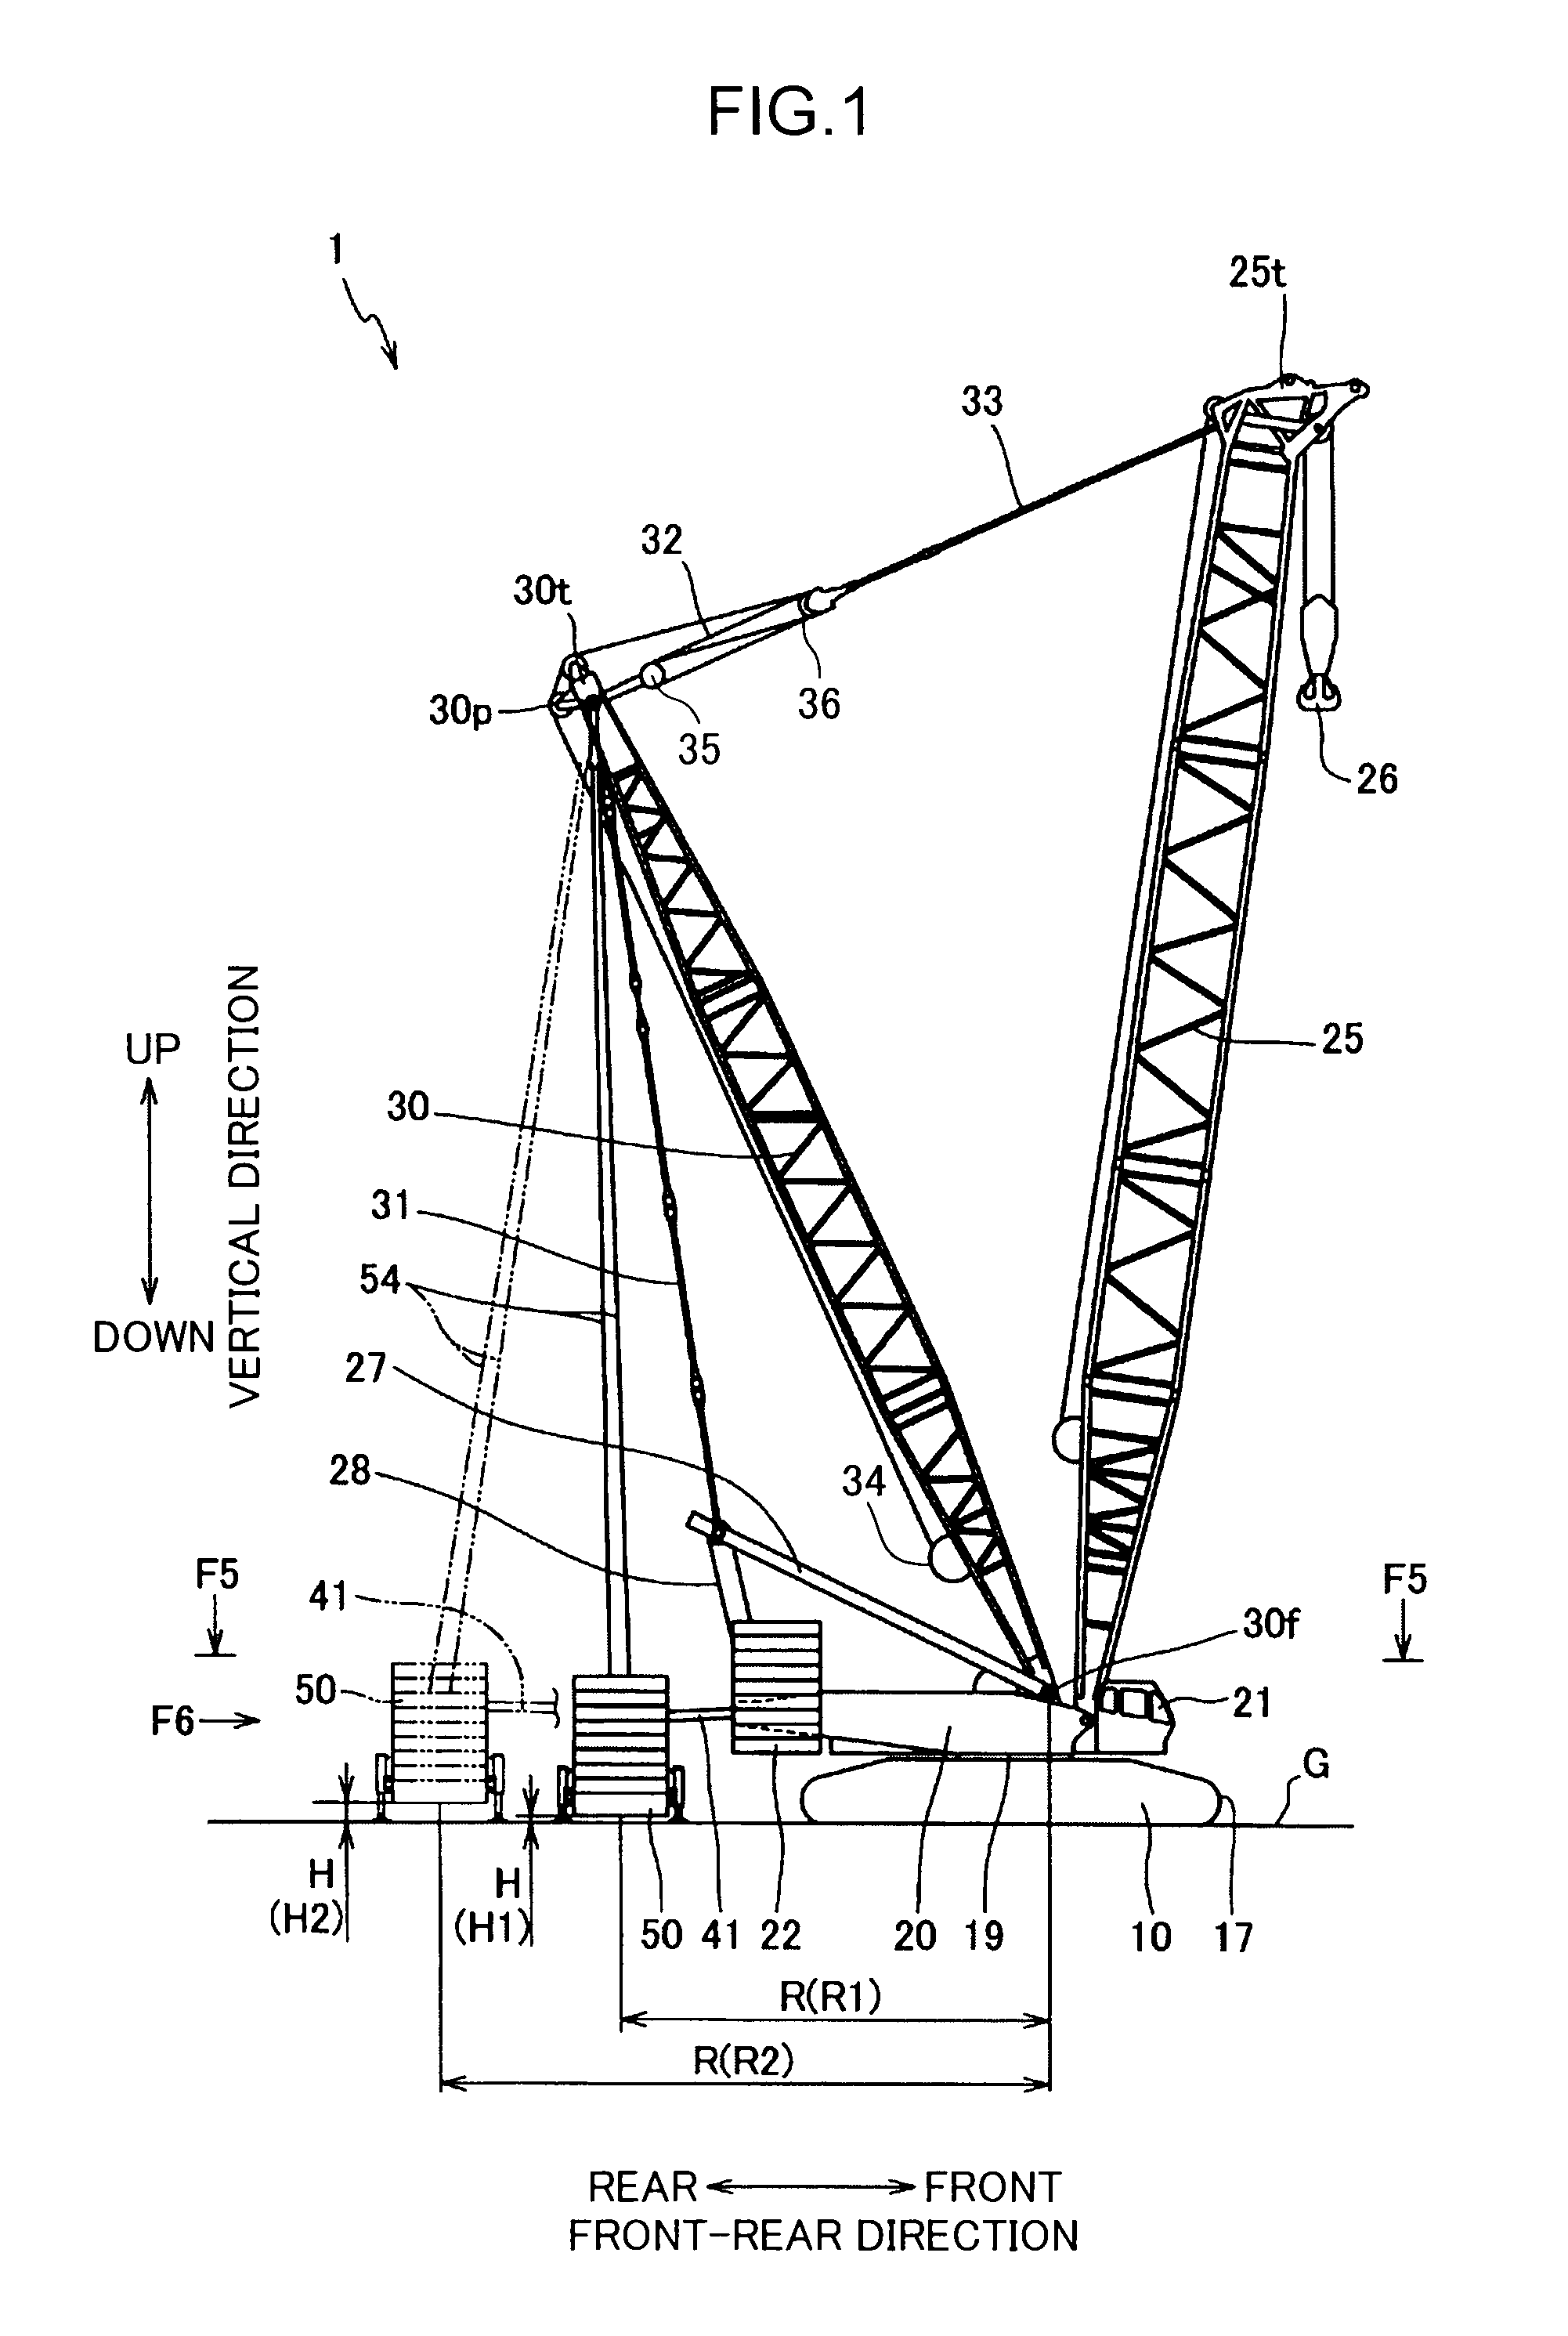 Mobile crane having counterweight